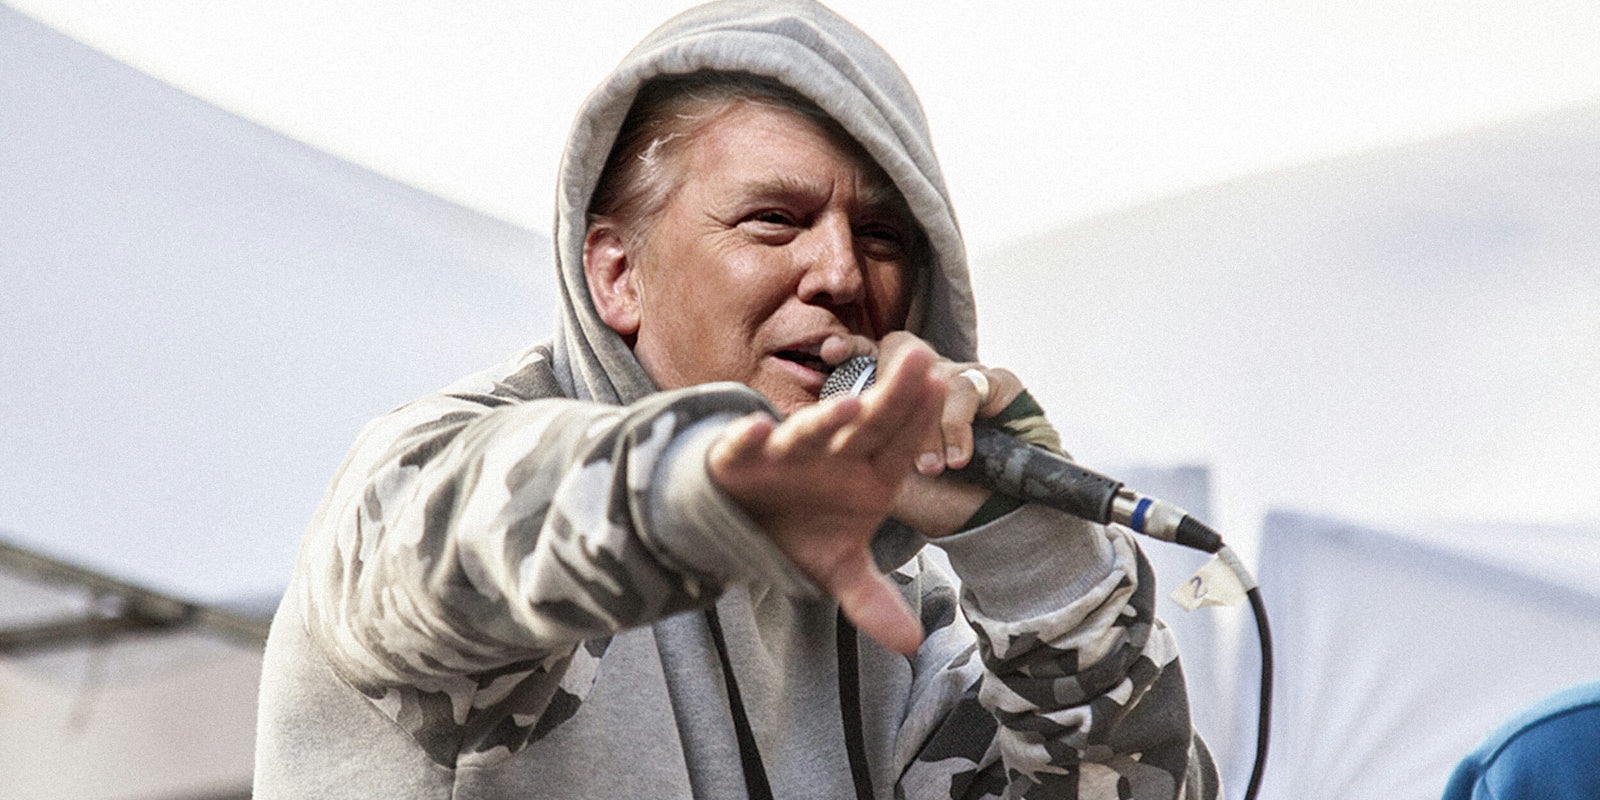 Donald Trump rapping